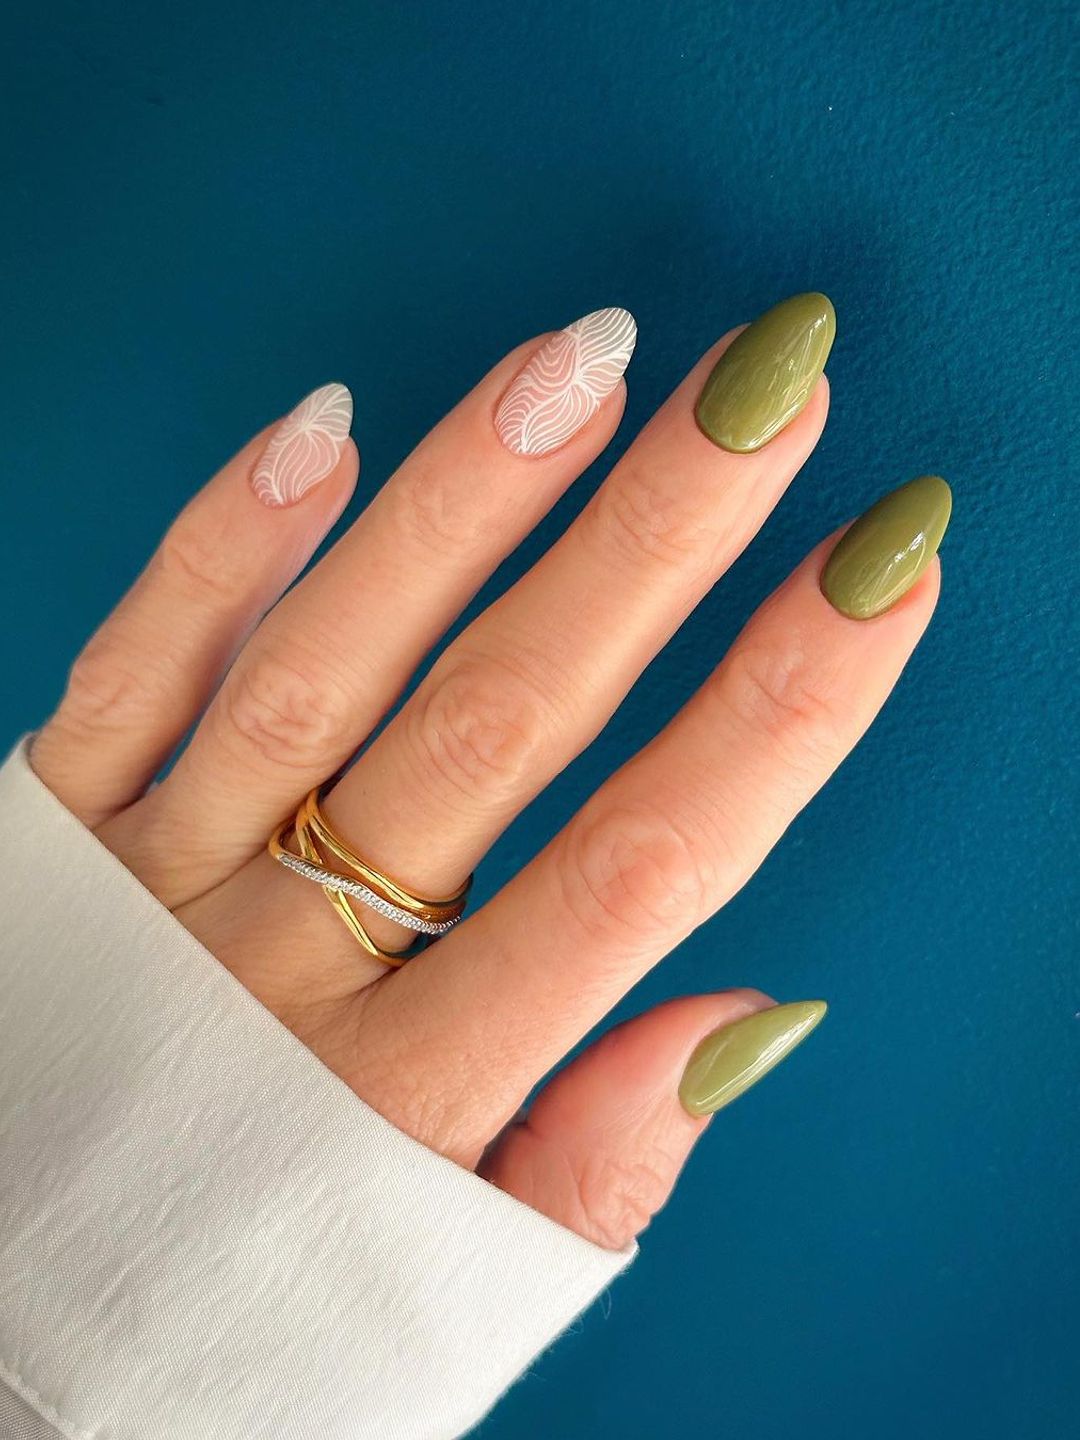 Olive nails 